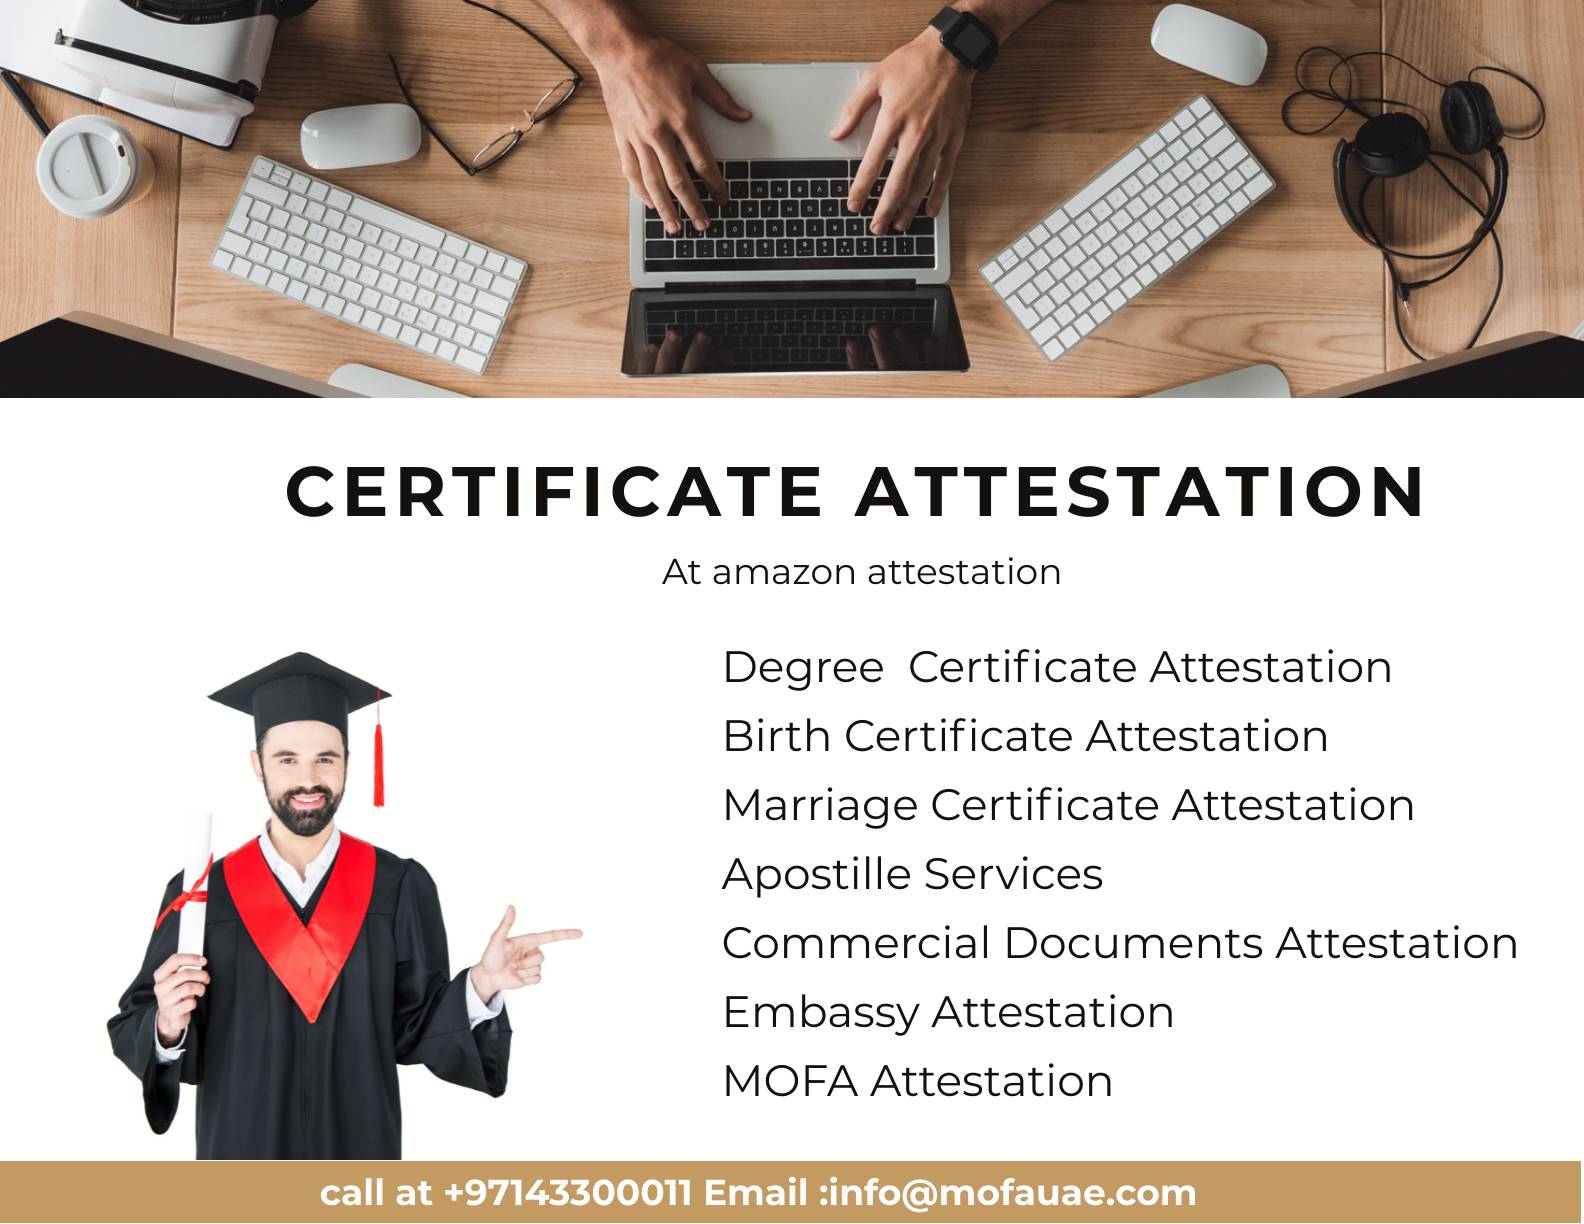 Certificate attestation uae